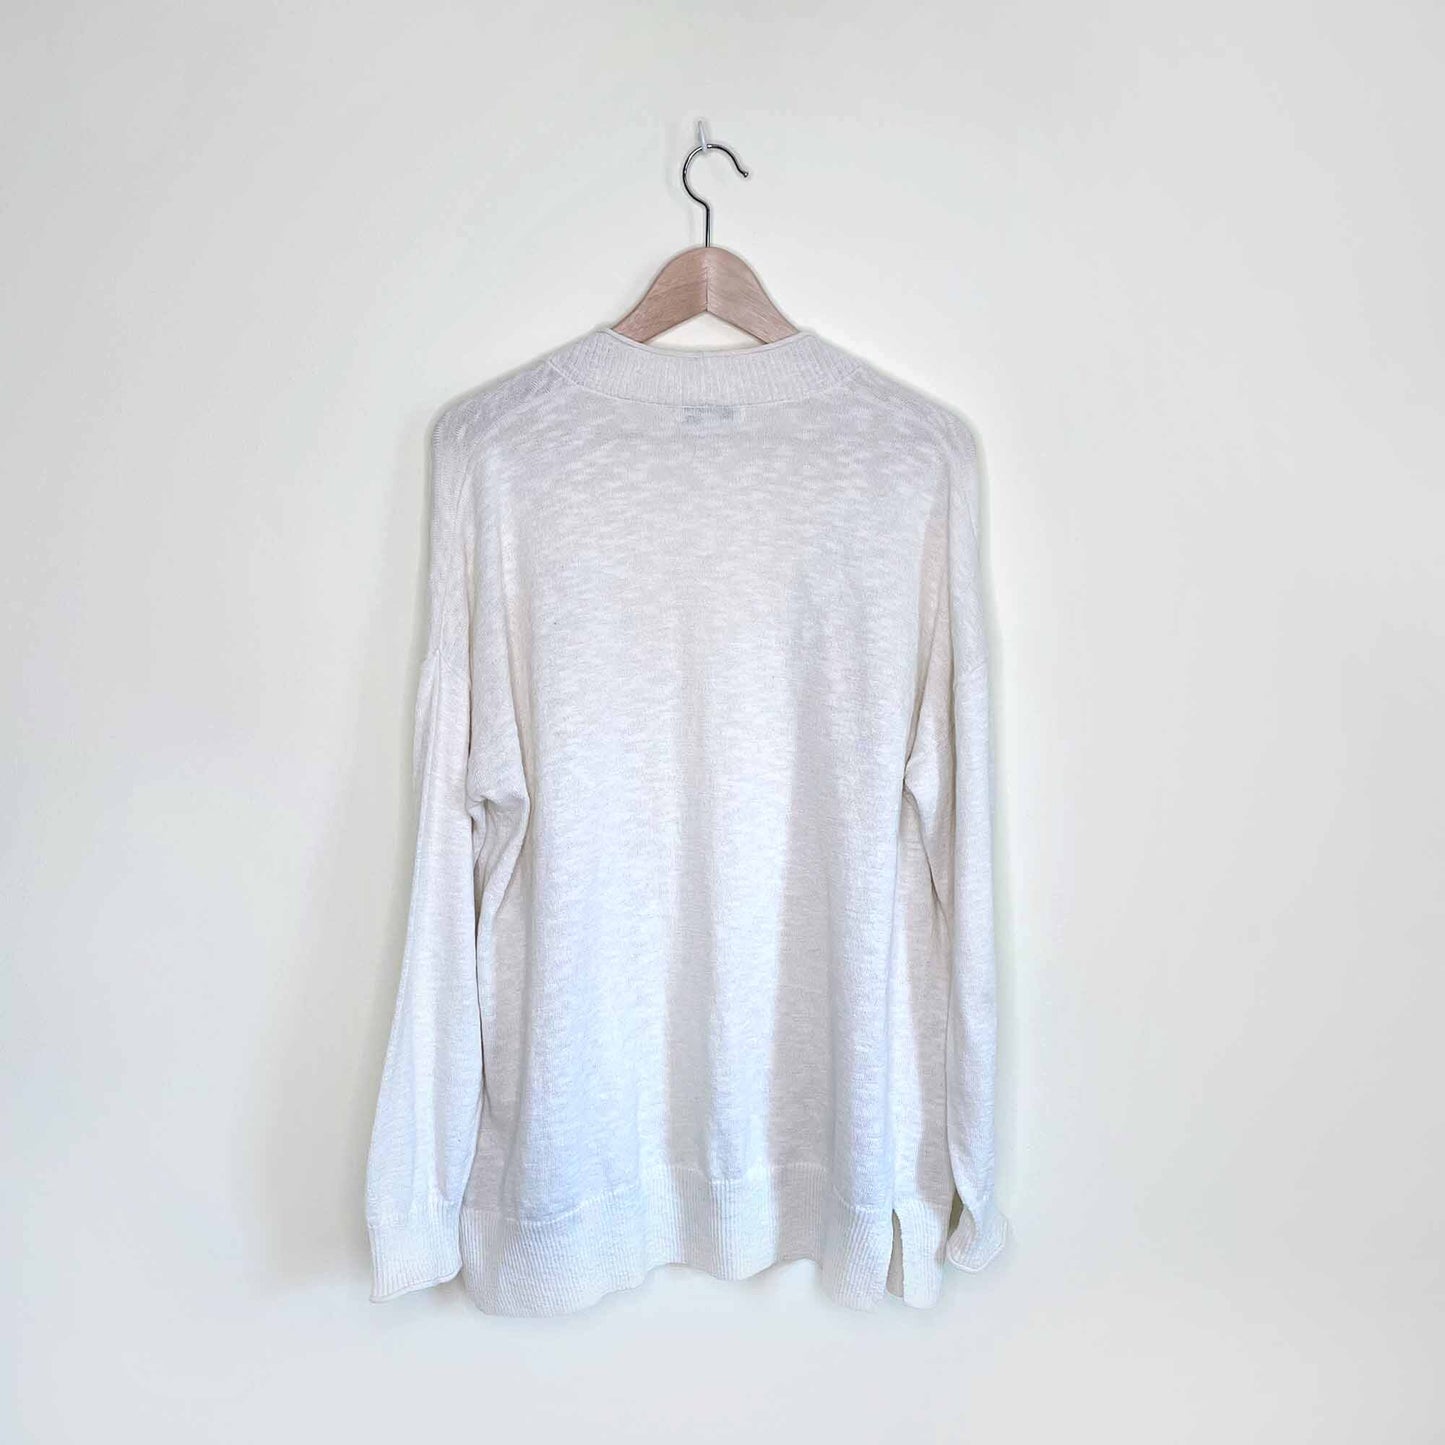 madewell marled bradley cardigan sweater - size large